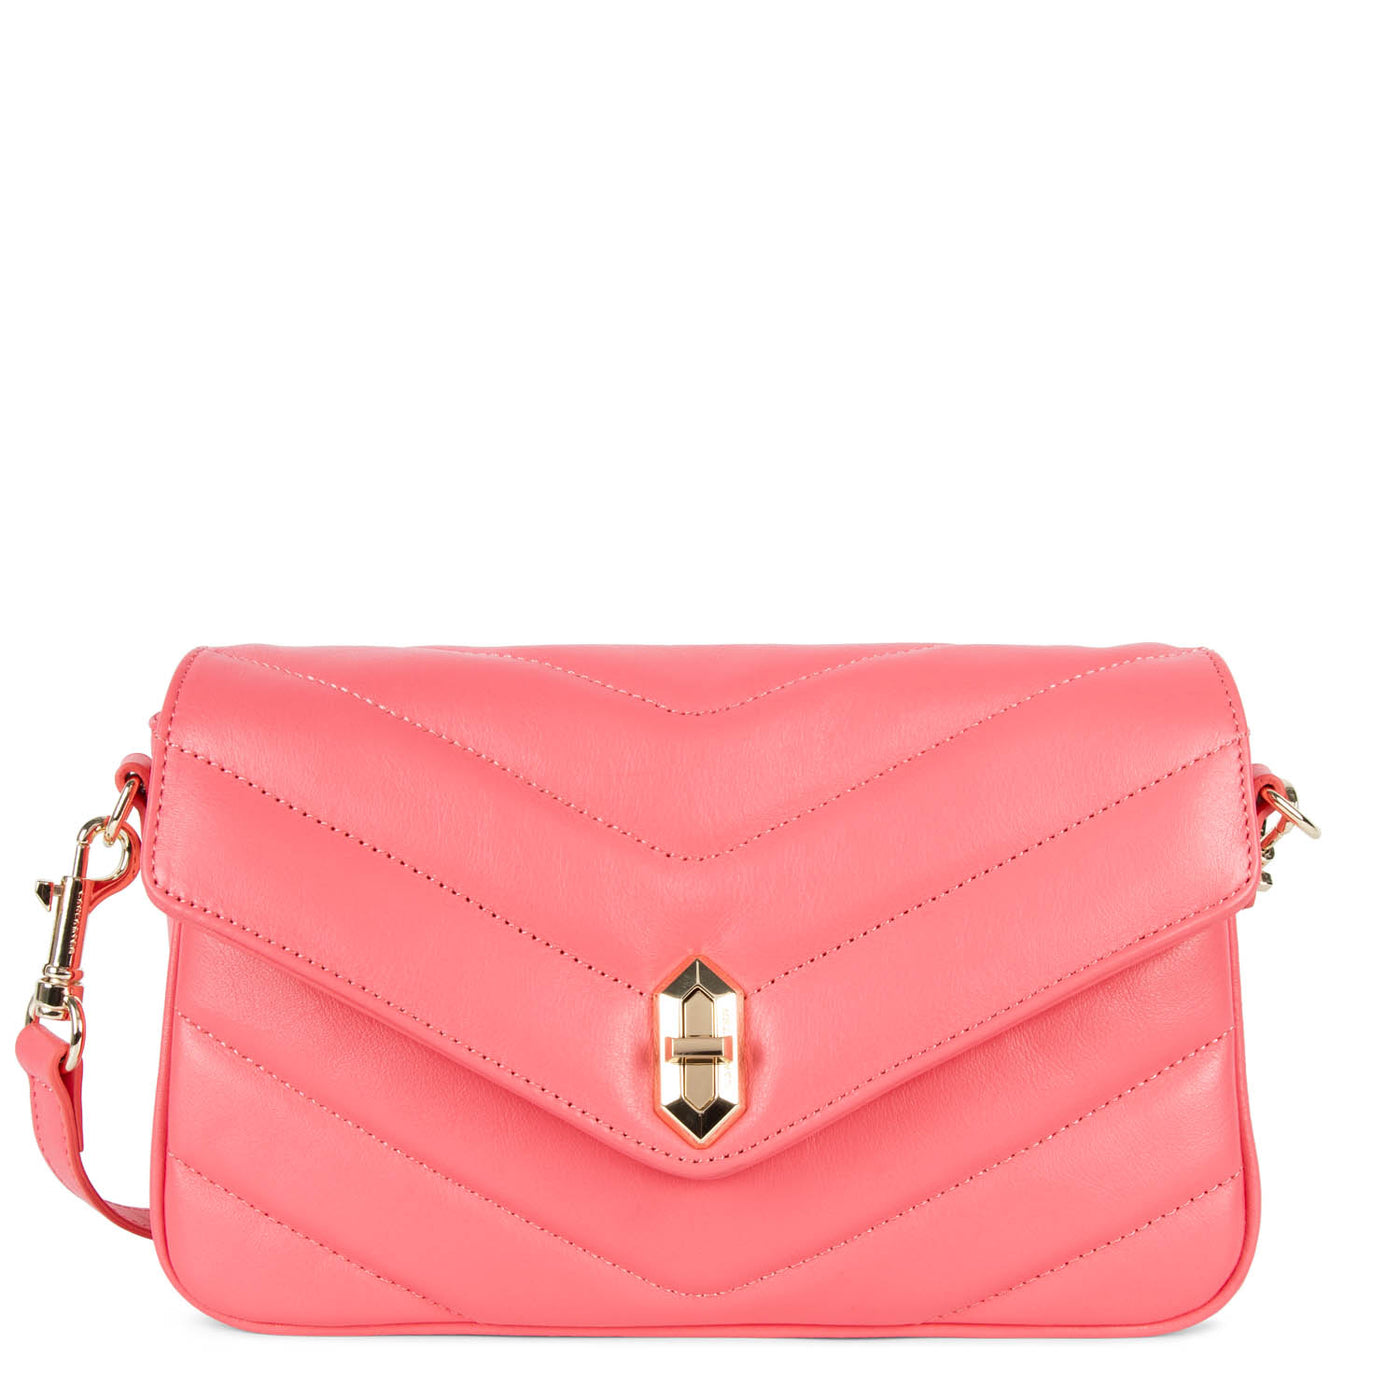 crossbody bag - soft matelassé #couleur_rose-fonc